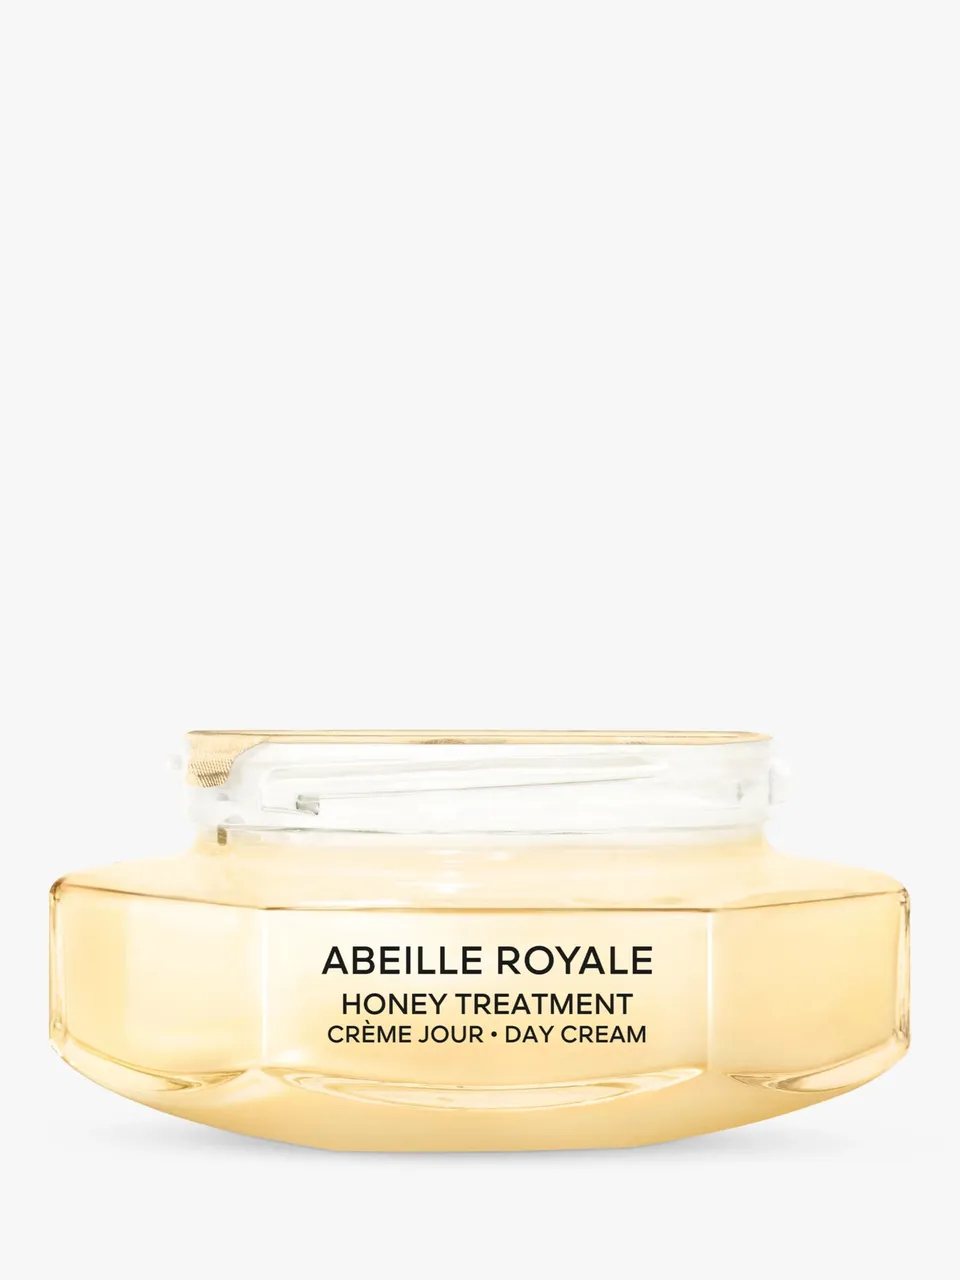 Guerlain Abeille Royale Honey Treatment Day Cream Refill, 50ml - Unisex - Size: 50ml